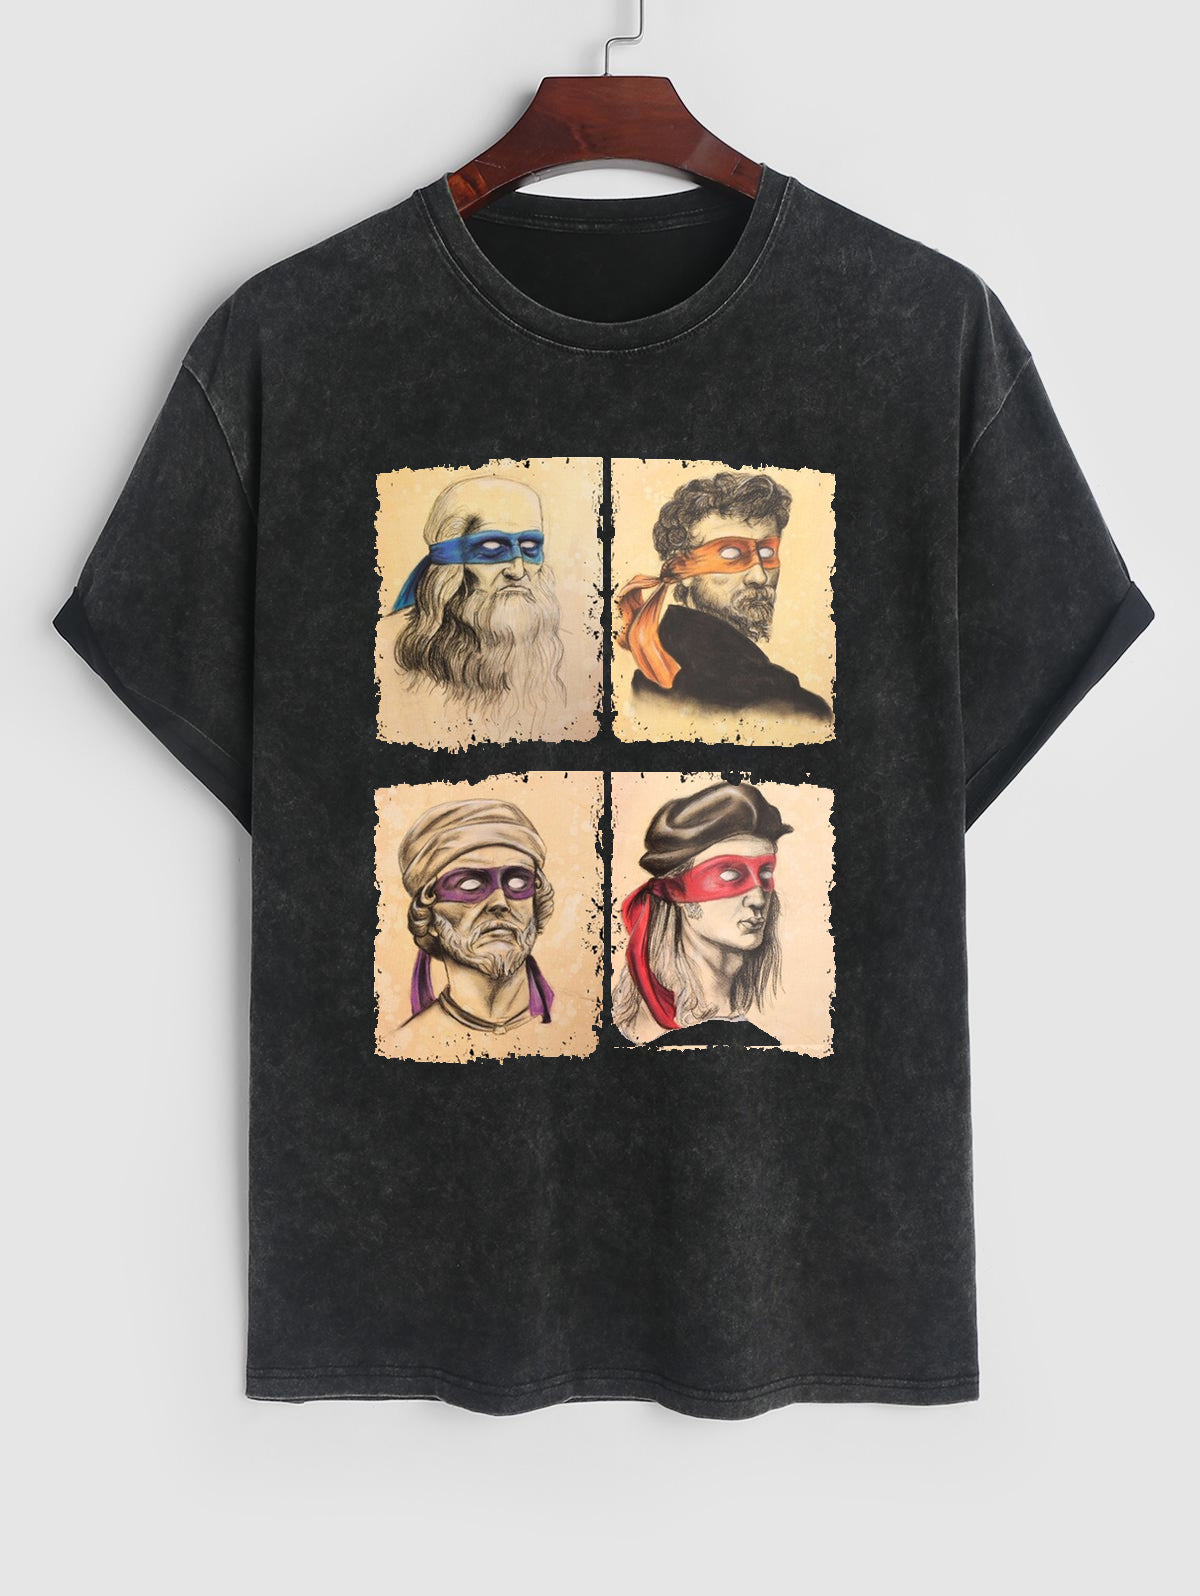 Leonardo Raphael Donatello Michelangelo Tmnt Scientists Comedy  Unisex T-shirt